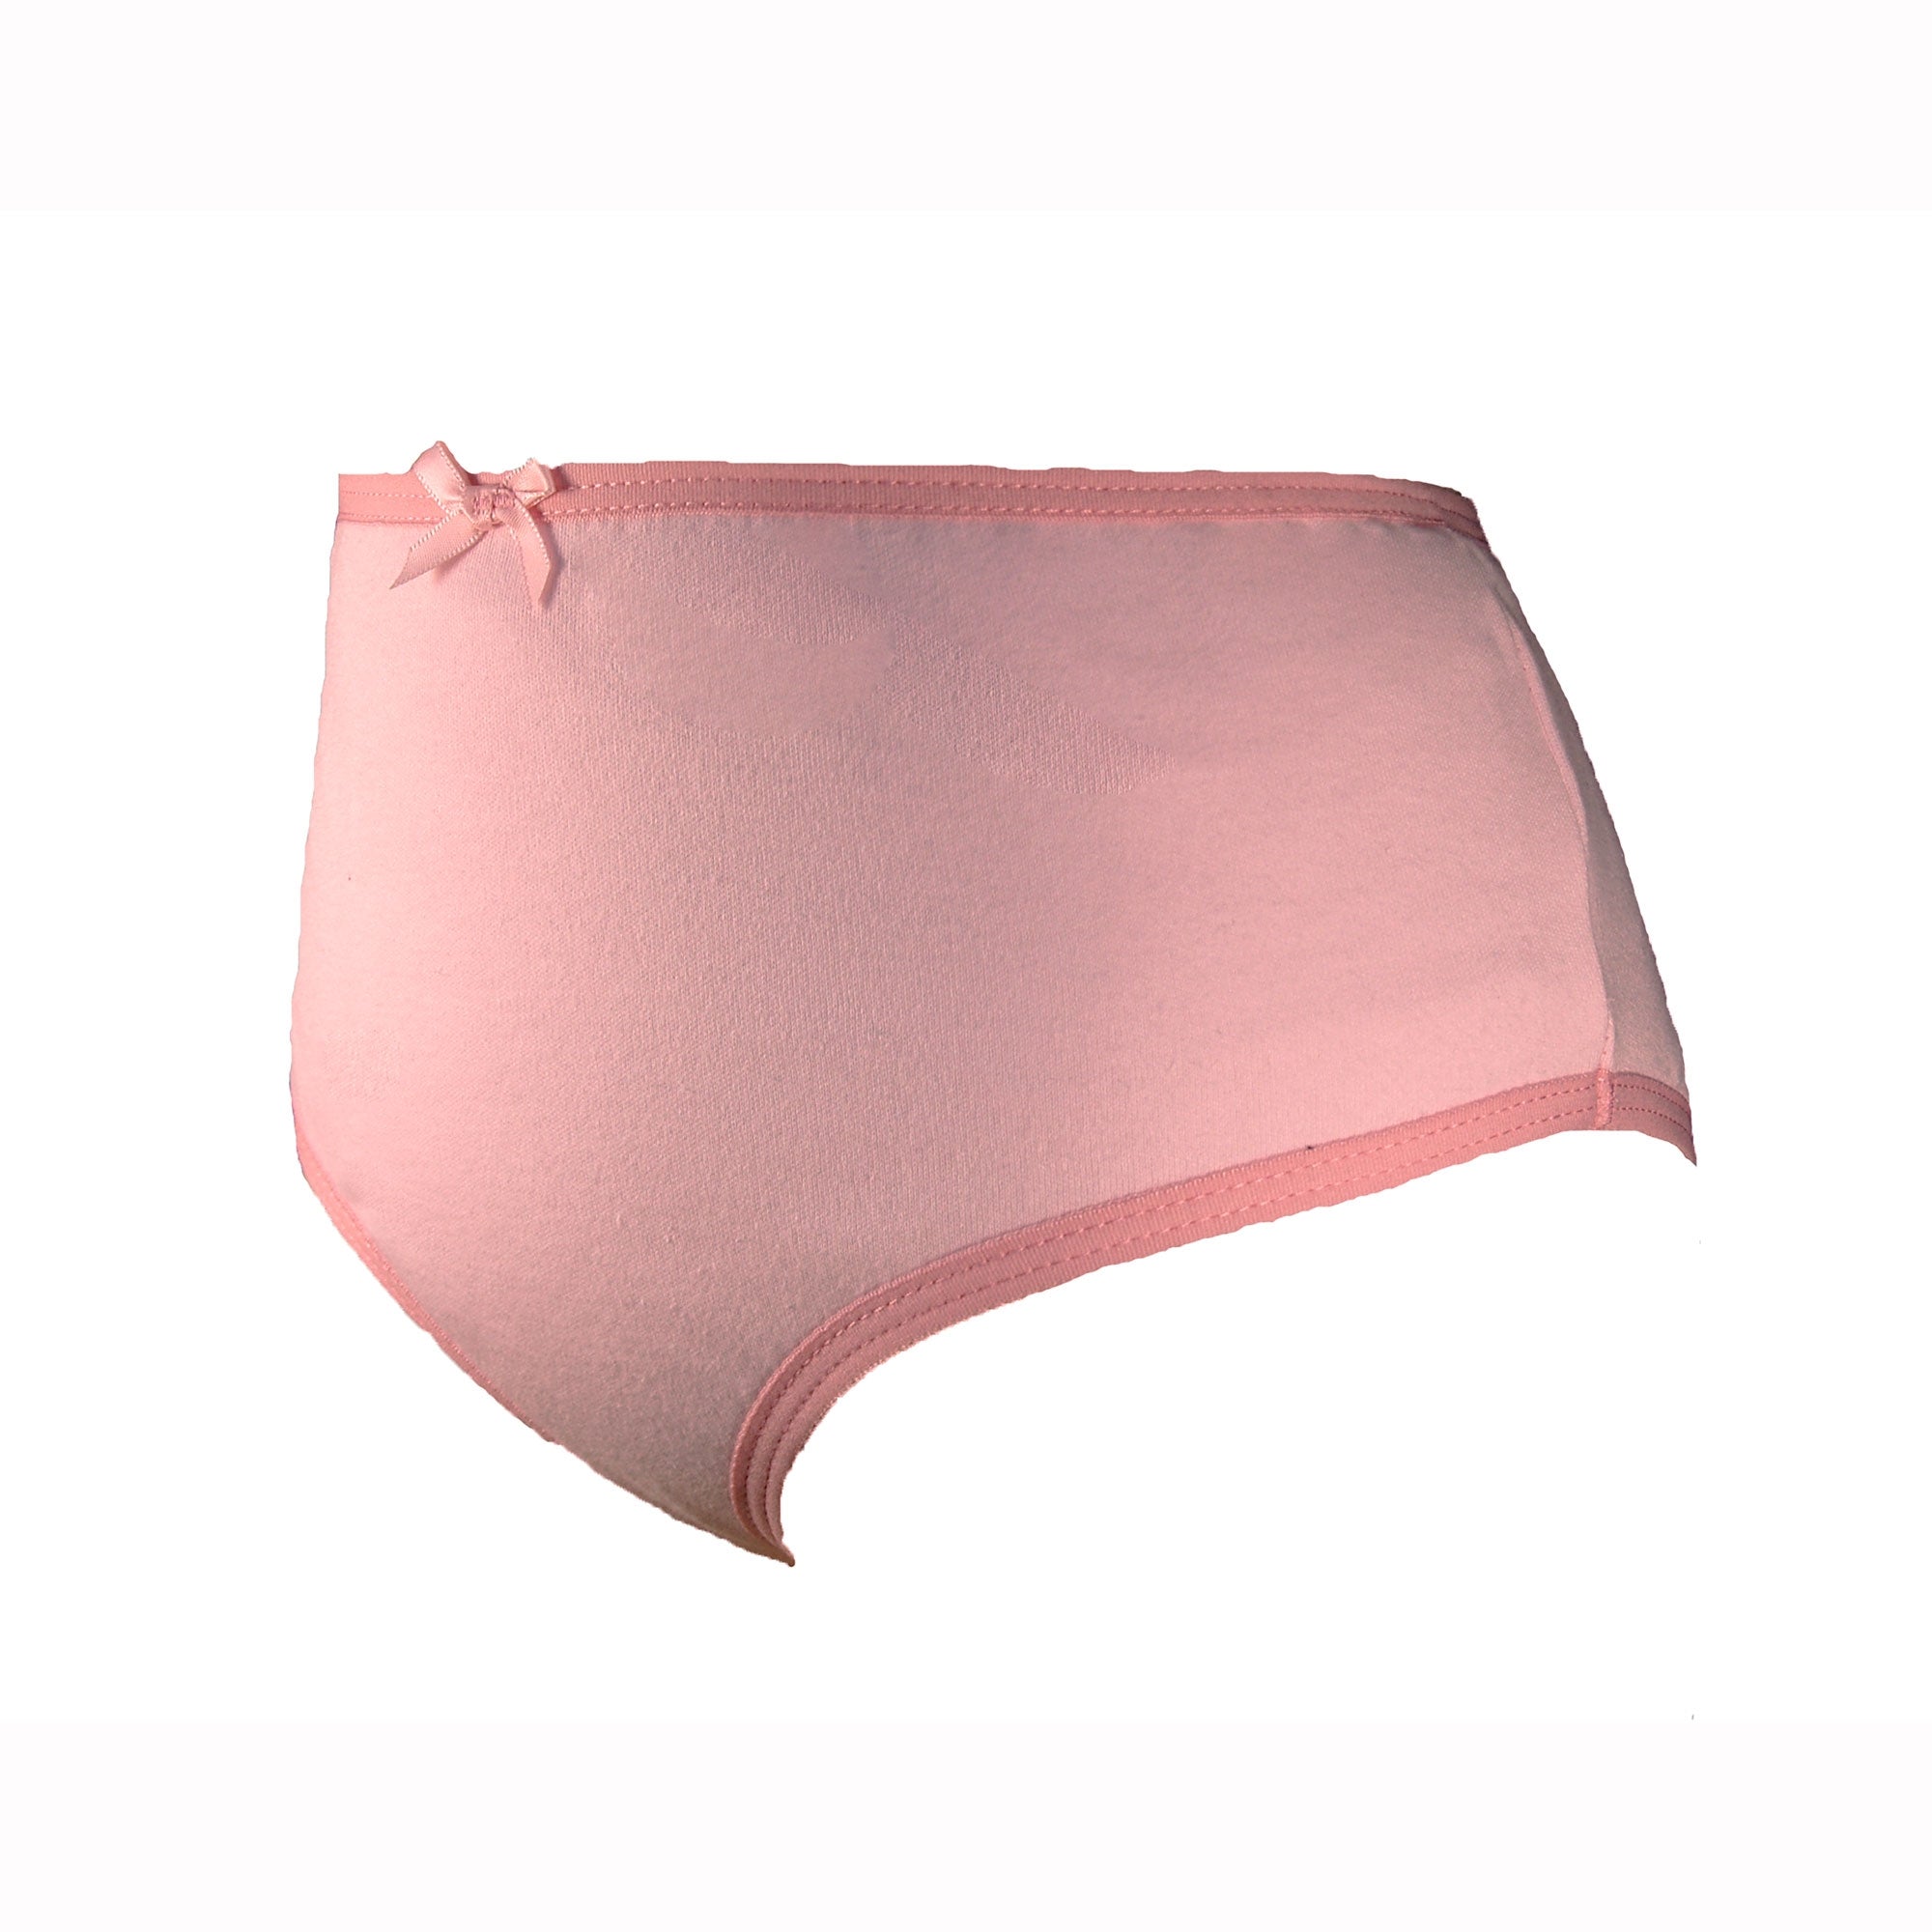 2017 Latest Fashion Large Size Transparent Panty Girls Kids Thong Underwear